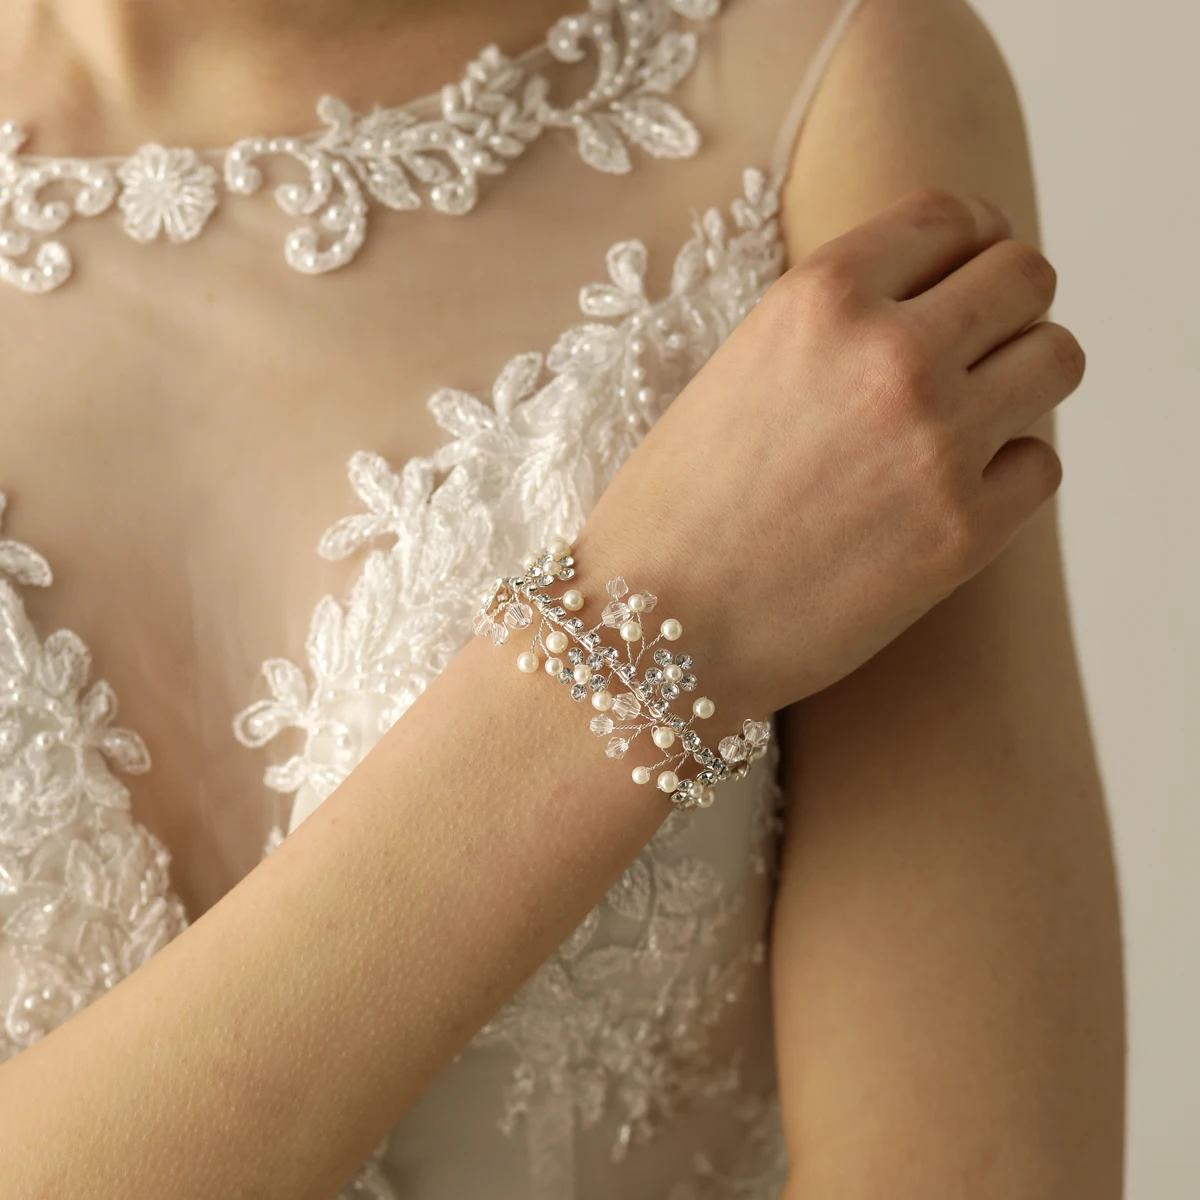 

Elegant Wedding Accessories Crystal Rhinestone Pearls Handmade Wrist Corsage for Travel Perform Studio Daily Photo Prop O584